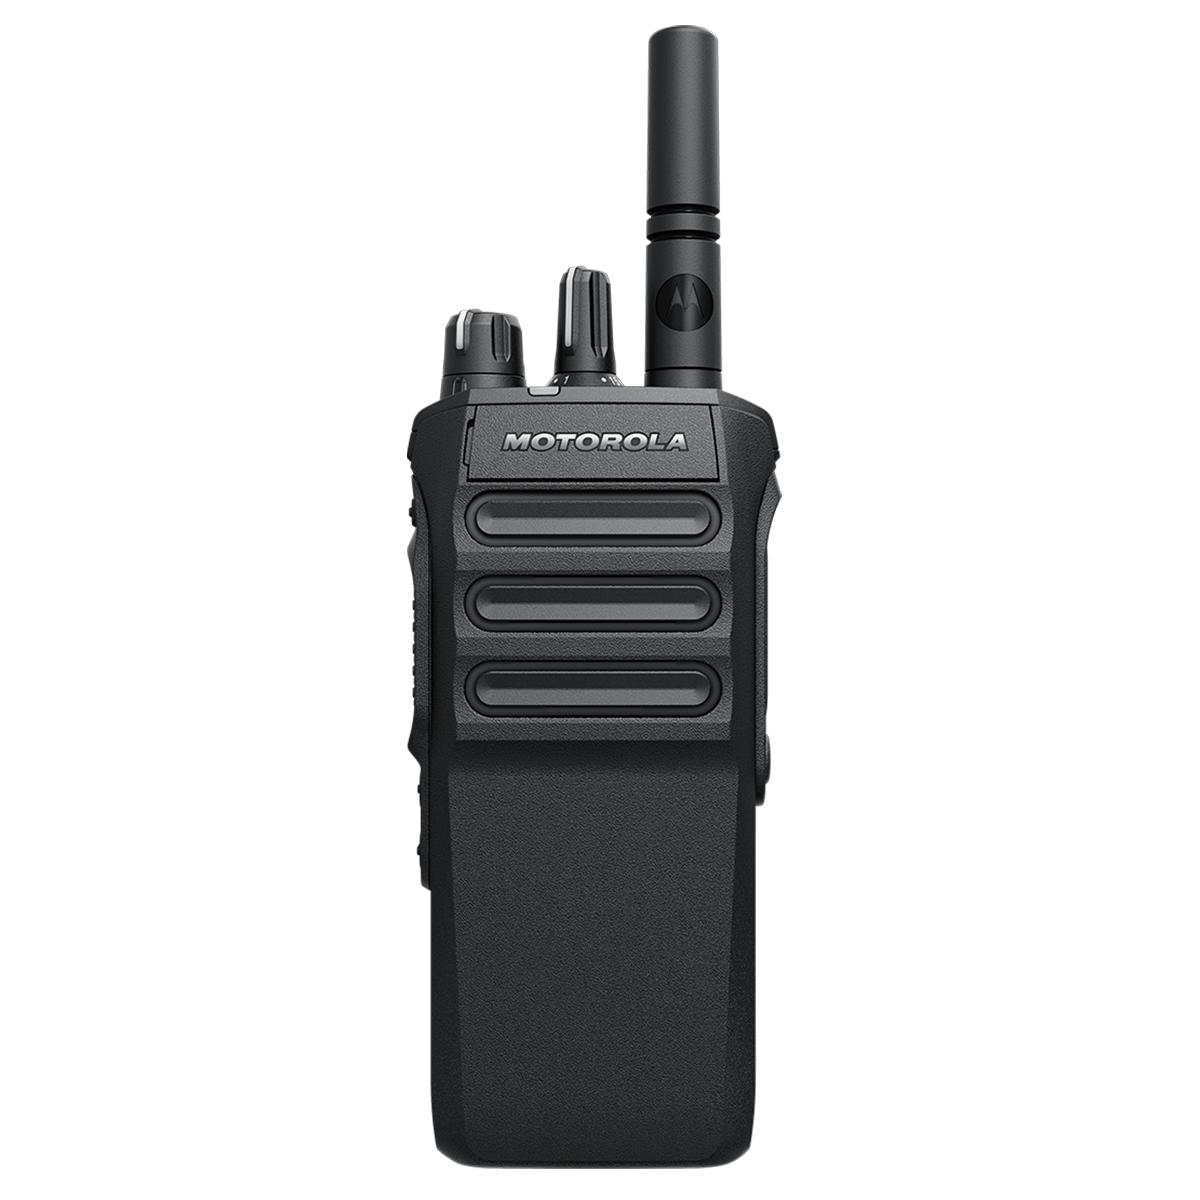 Radio Motorola R7 1000 Ch 4W UHF 403-527MHz Enable NKP